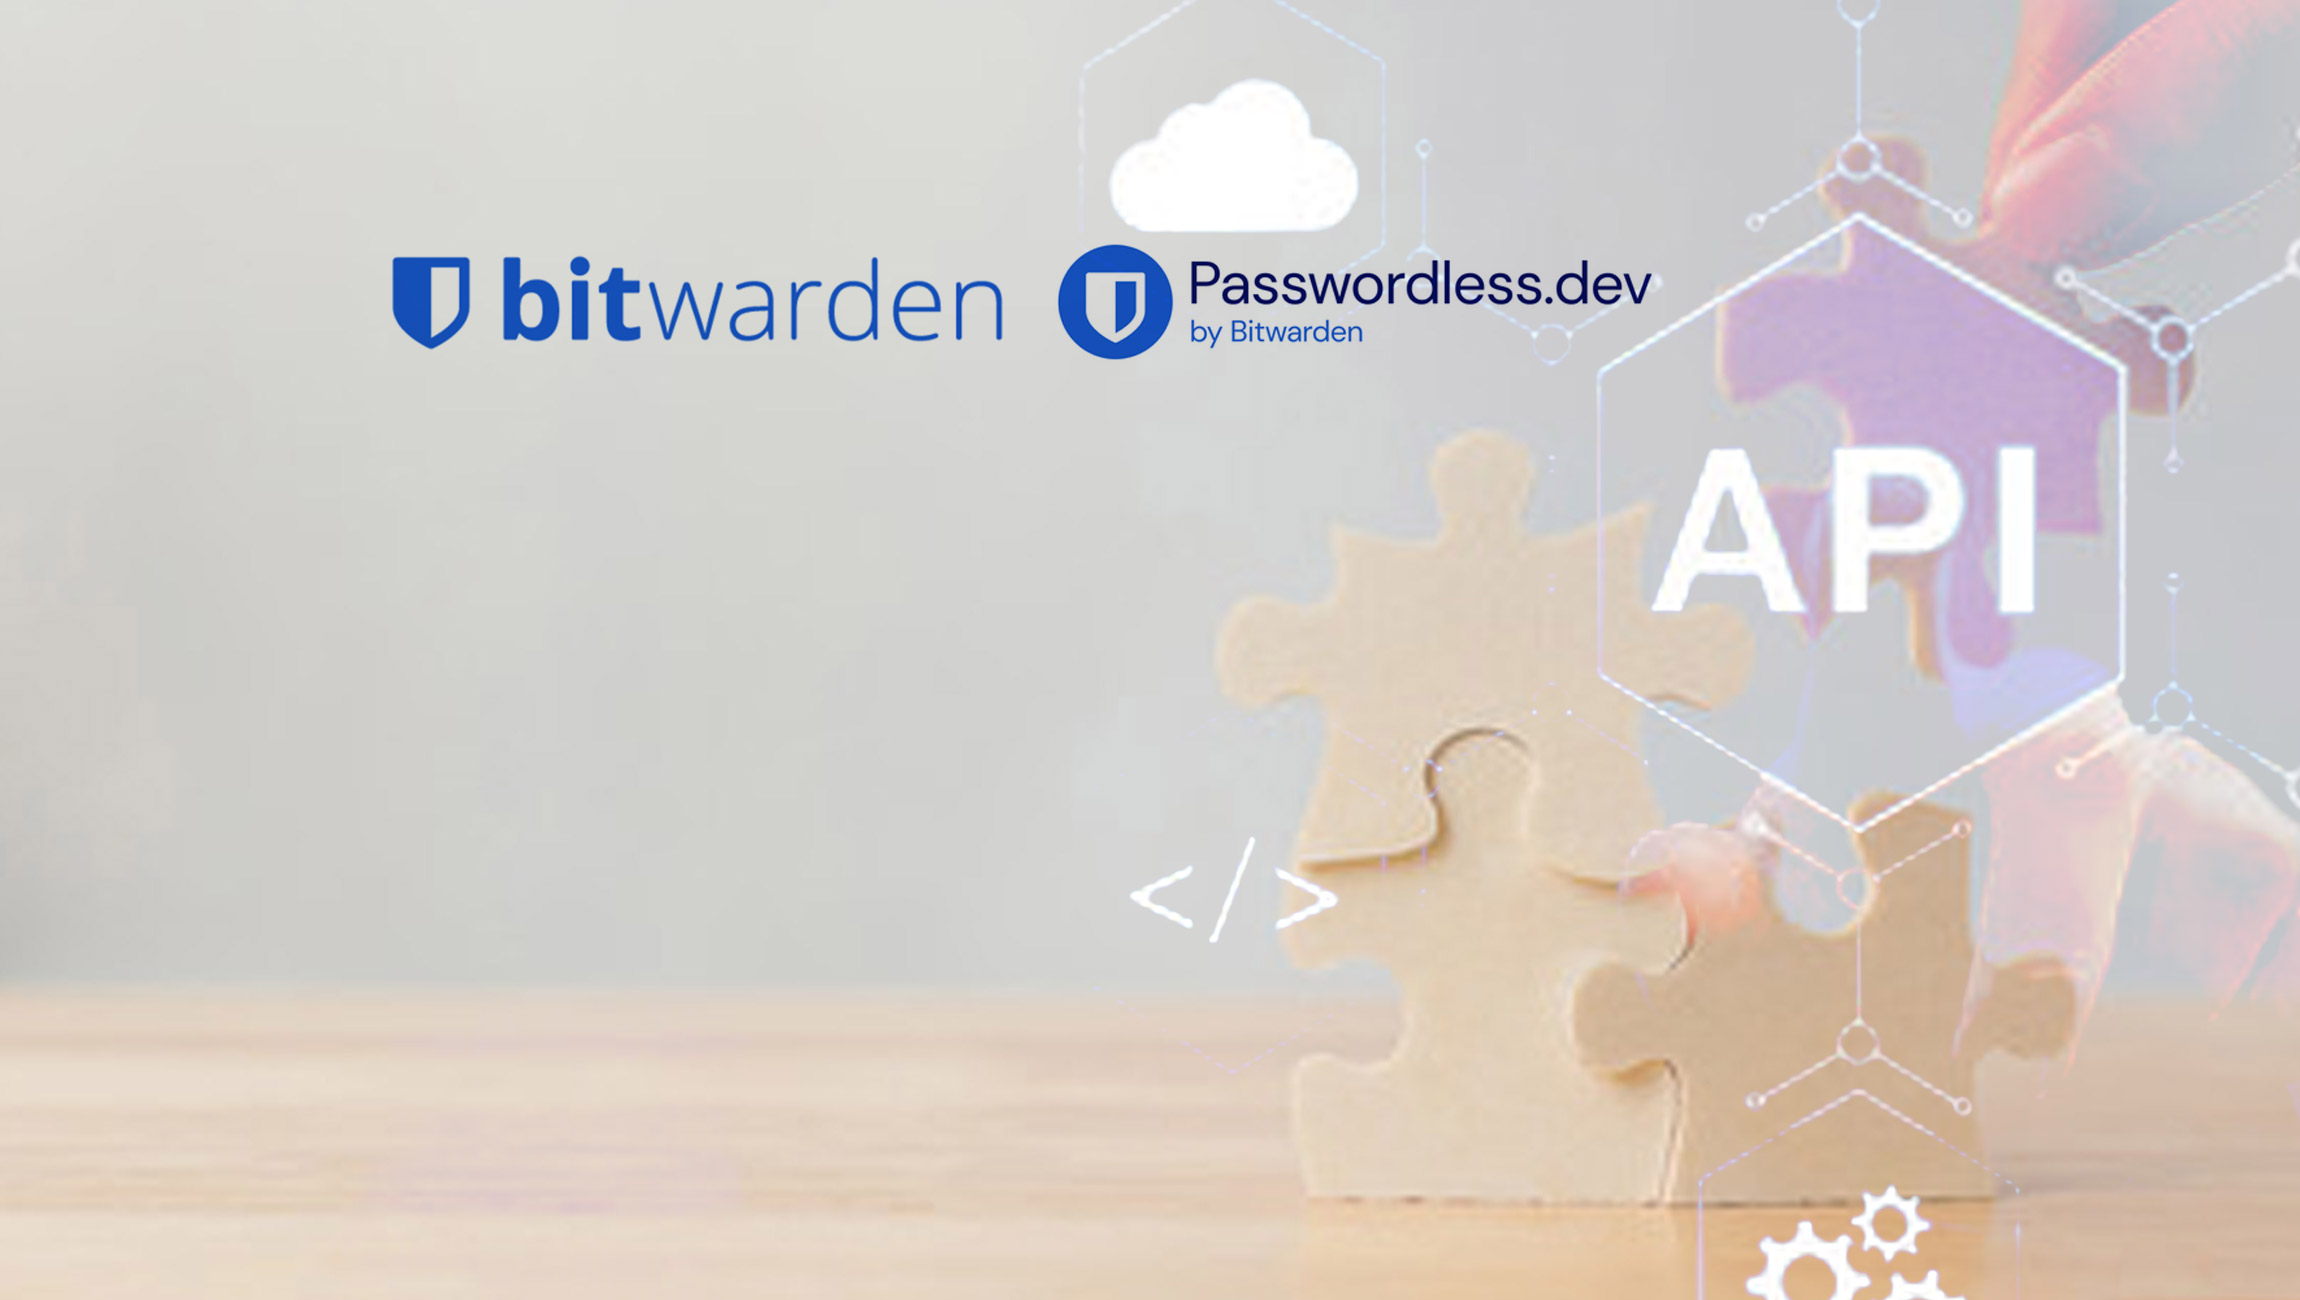 Bitwarden Acquires Passwordless.dev, the Leading API Built on Modern FIDO2 WebAuthn Standards 1